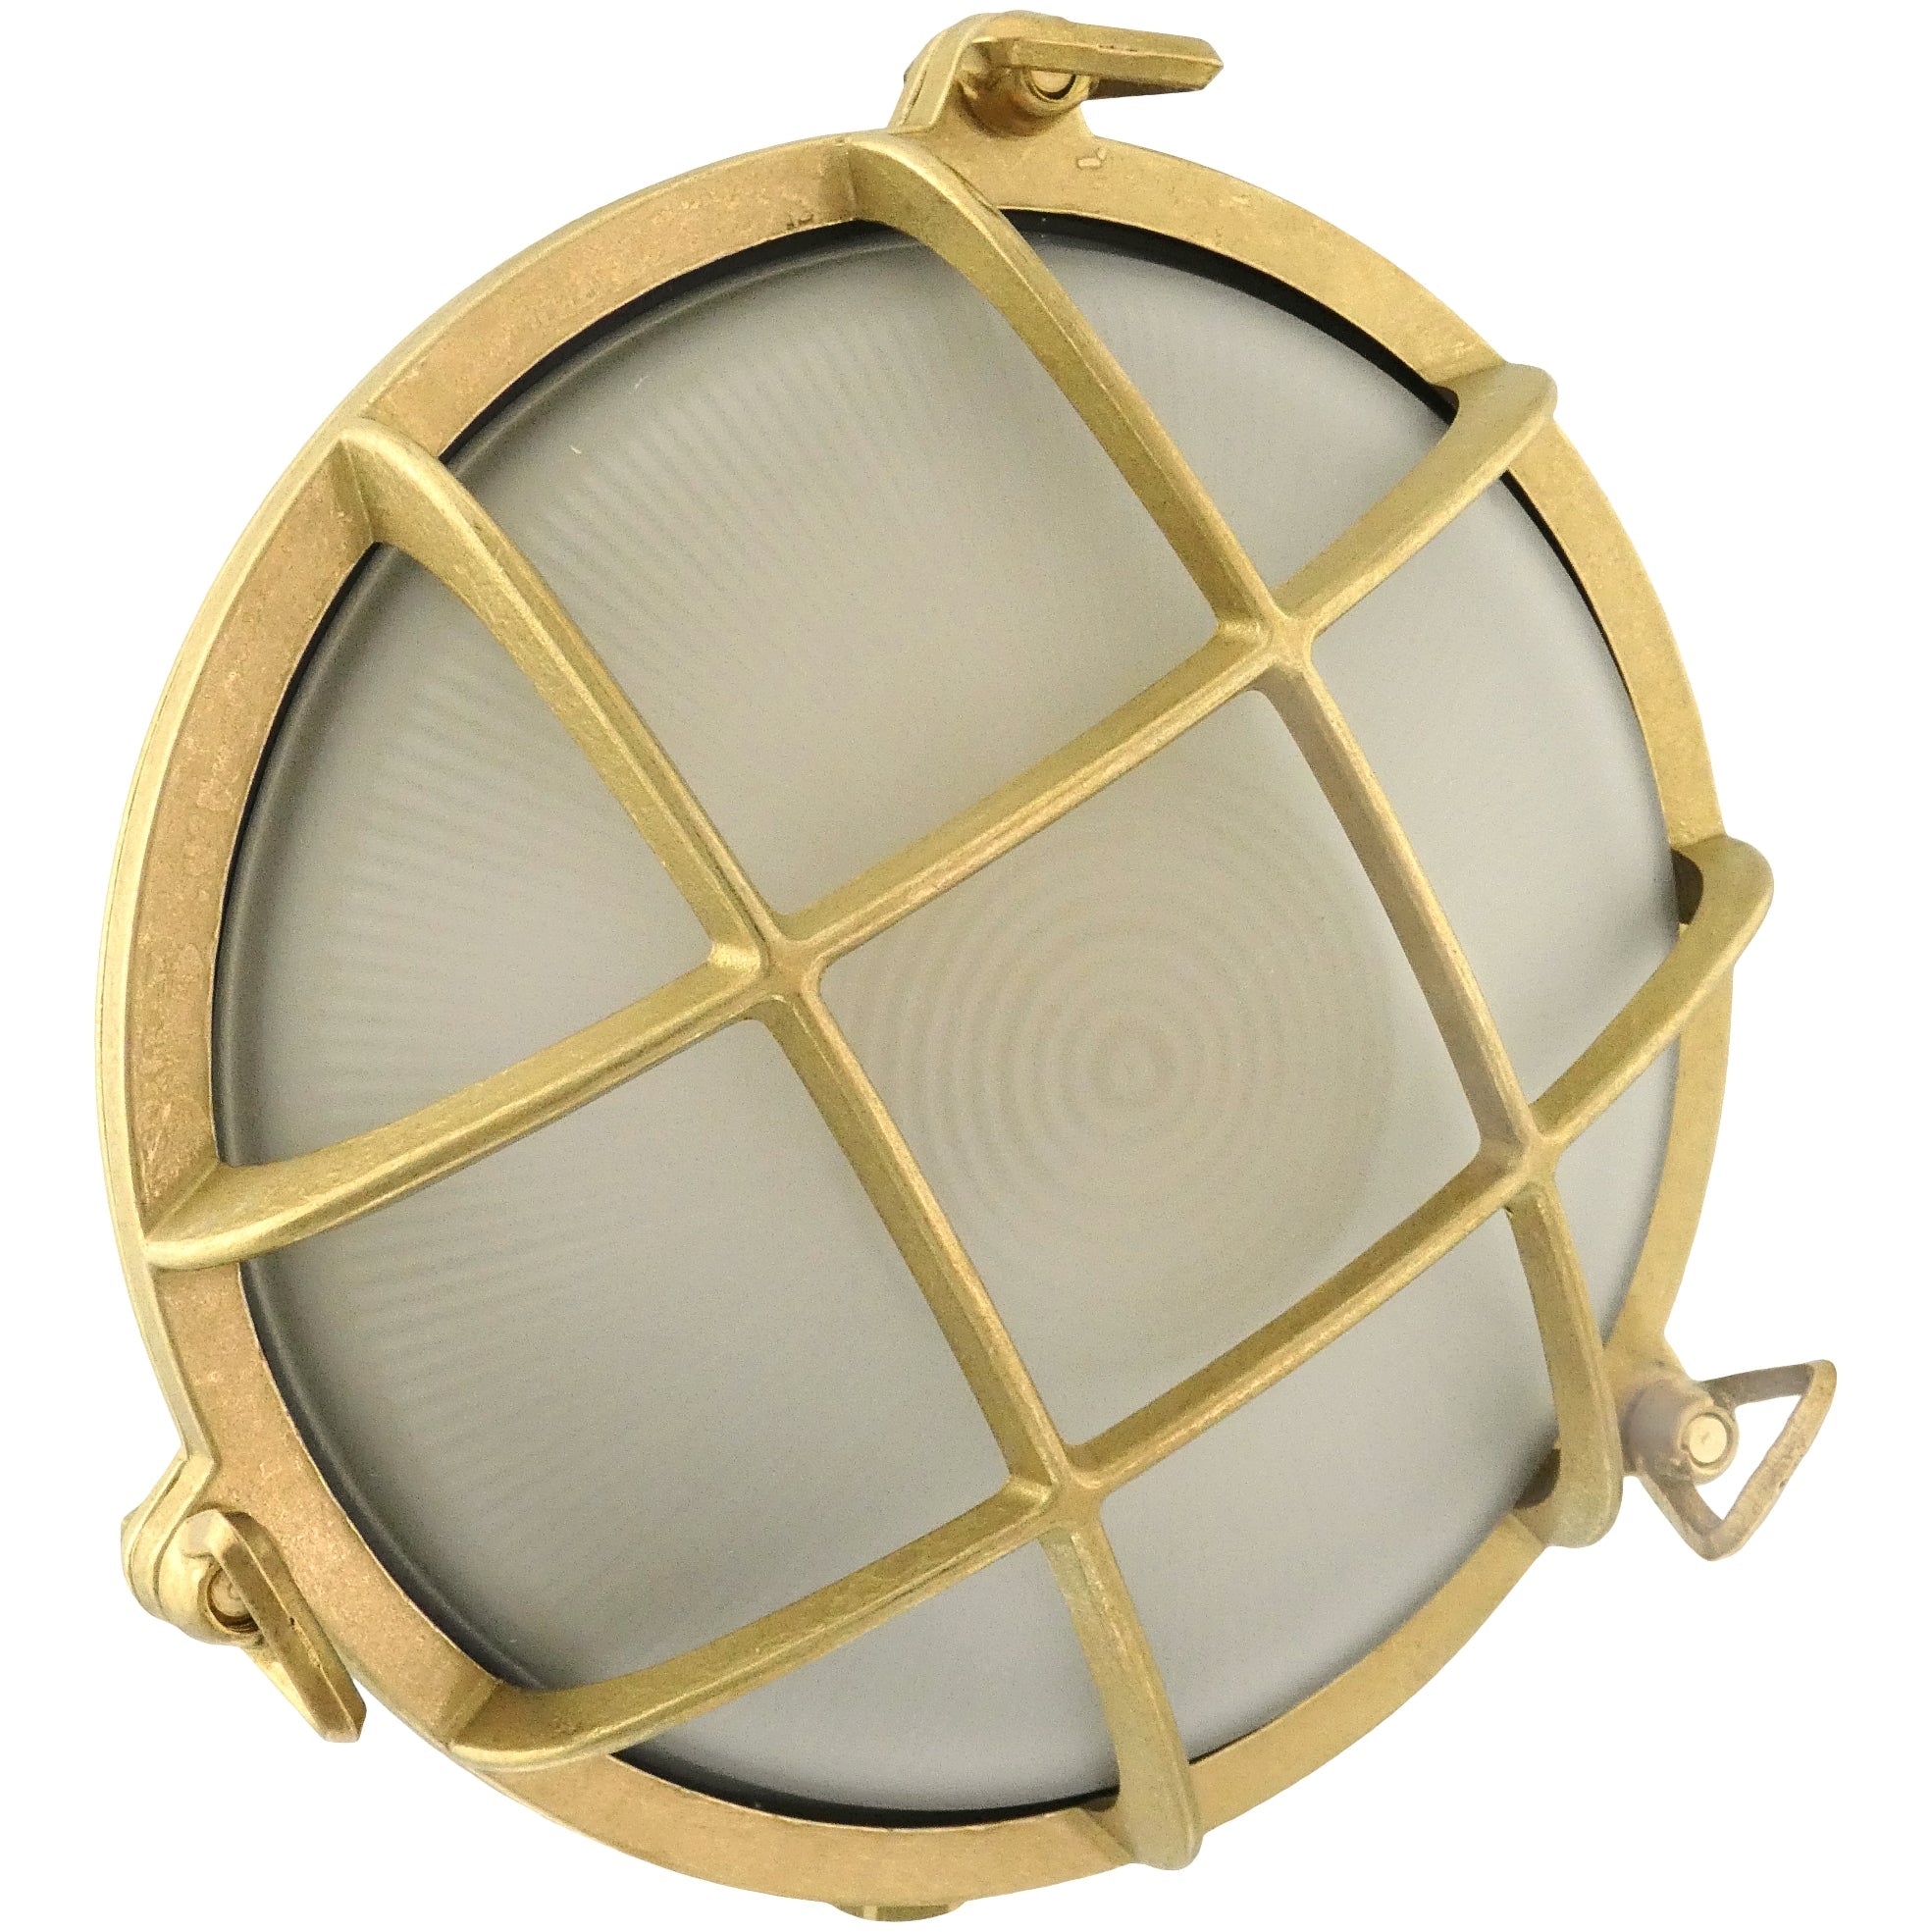 Rota Large Brass bulkhead Round outdoor waterproof light Nautical marine wall lamp